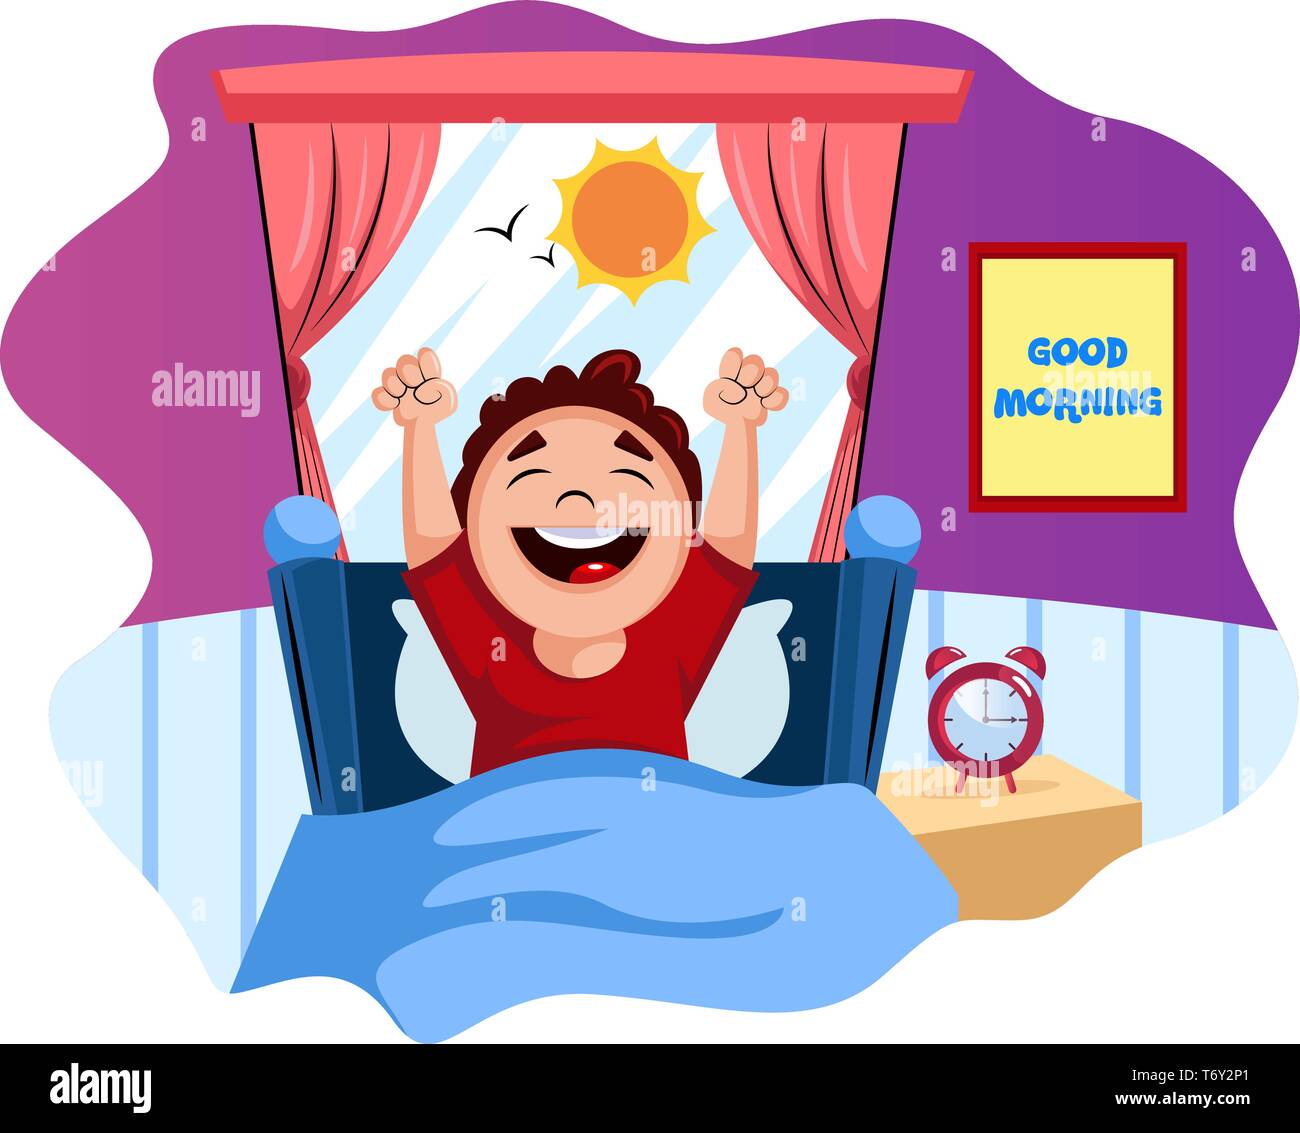 Boy woke up happy illustration vector on white background Stock Vector